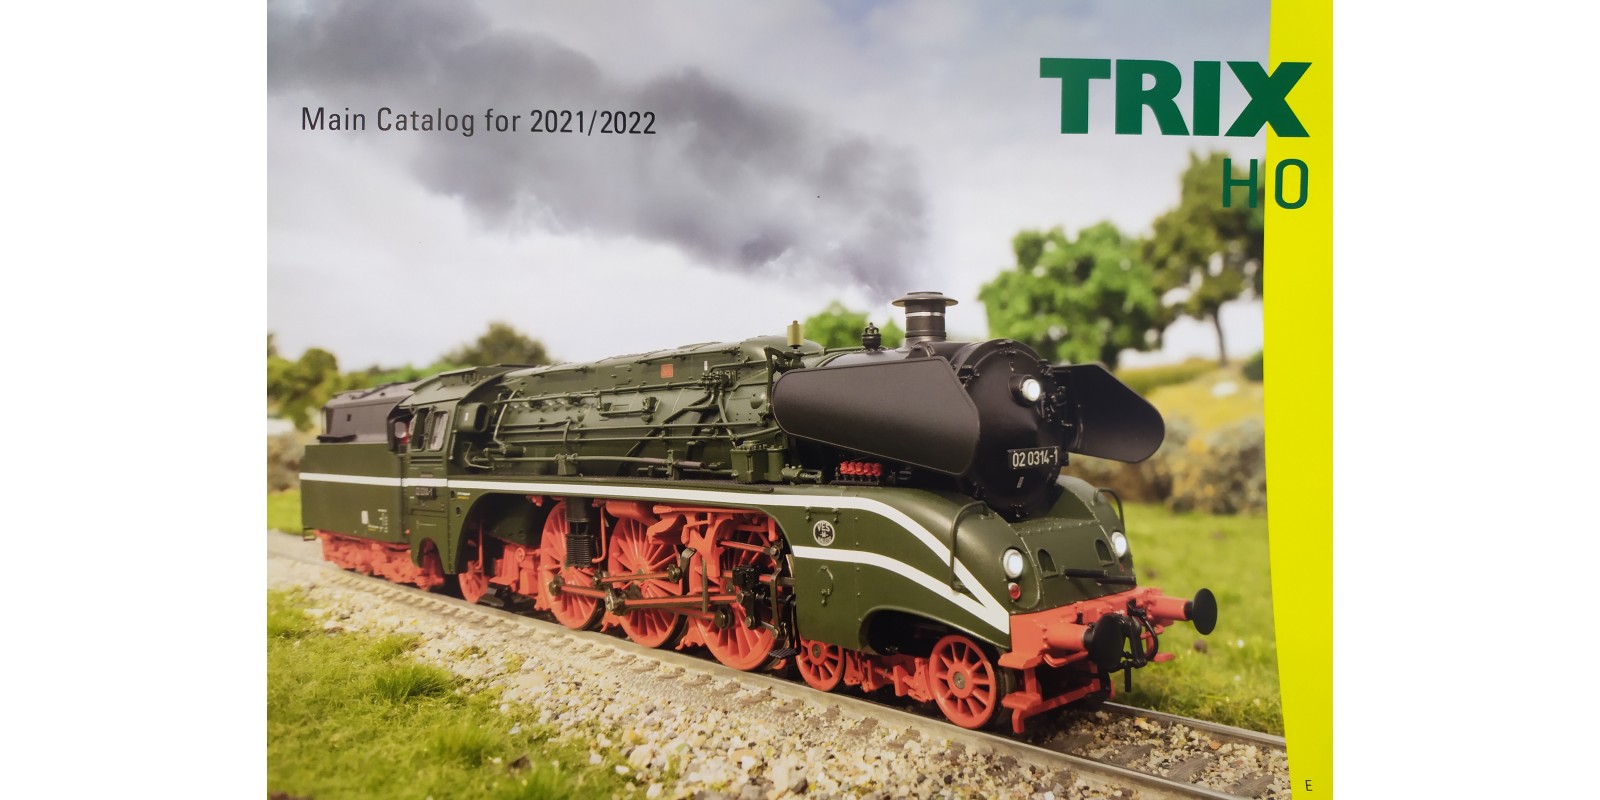 T19828 Trix H0-Katalog 2021/2022 E